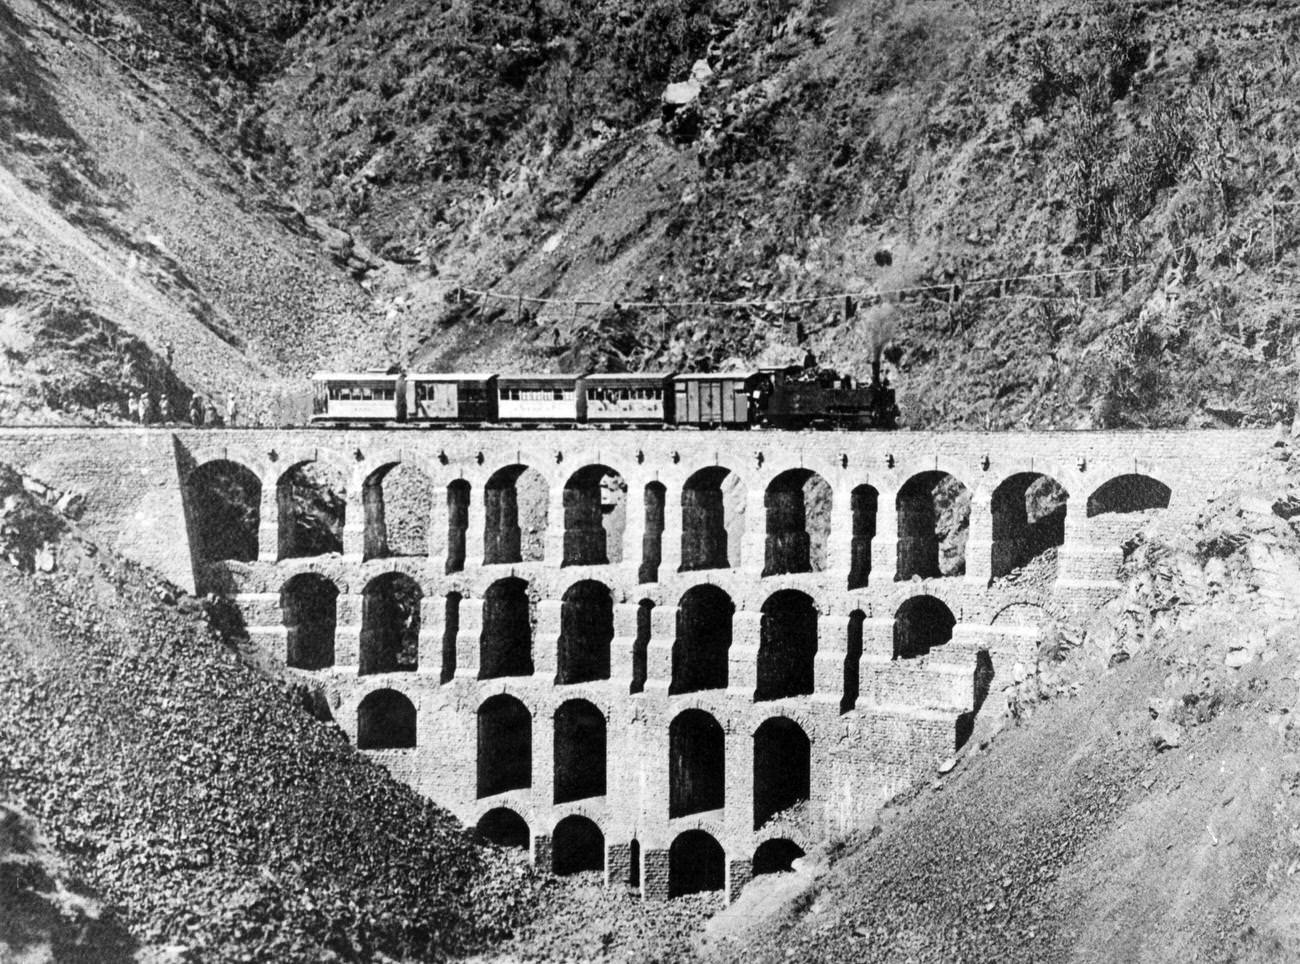 A remarkable bridge known as a "Gallery" on the Kalka-Simla Railway.